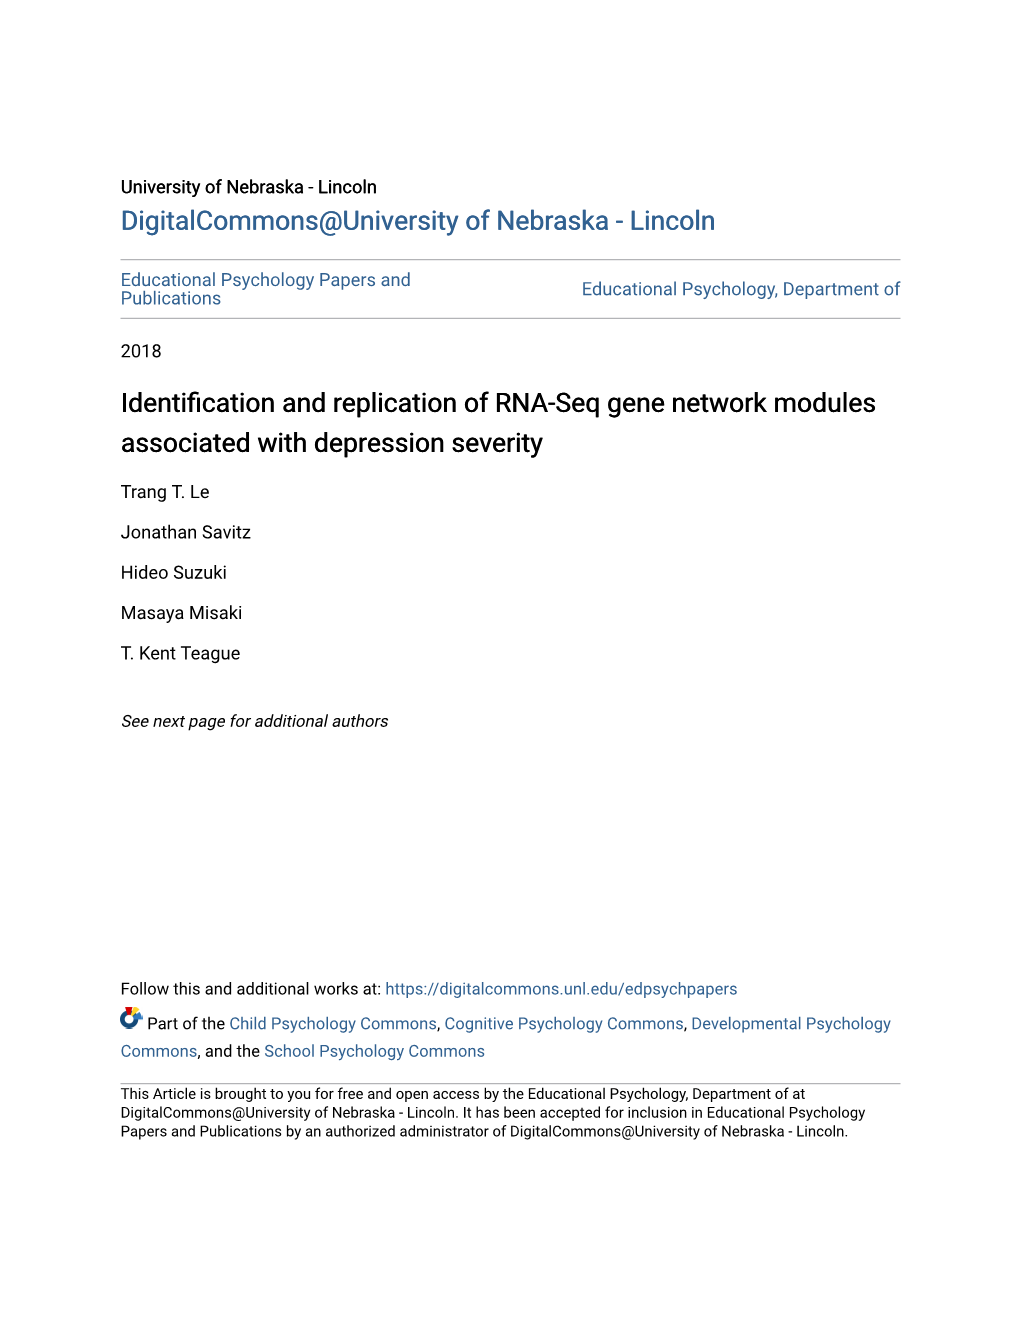 Identification and Replication of RNA-Seq Gene Network Modules